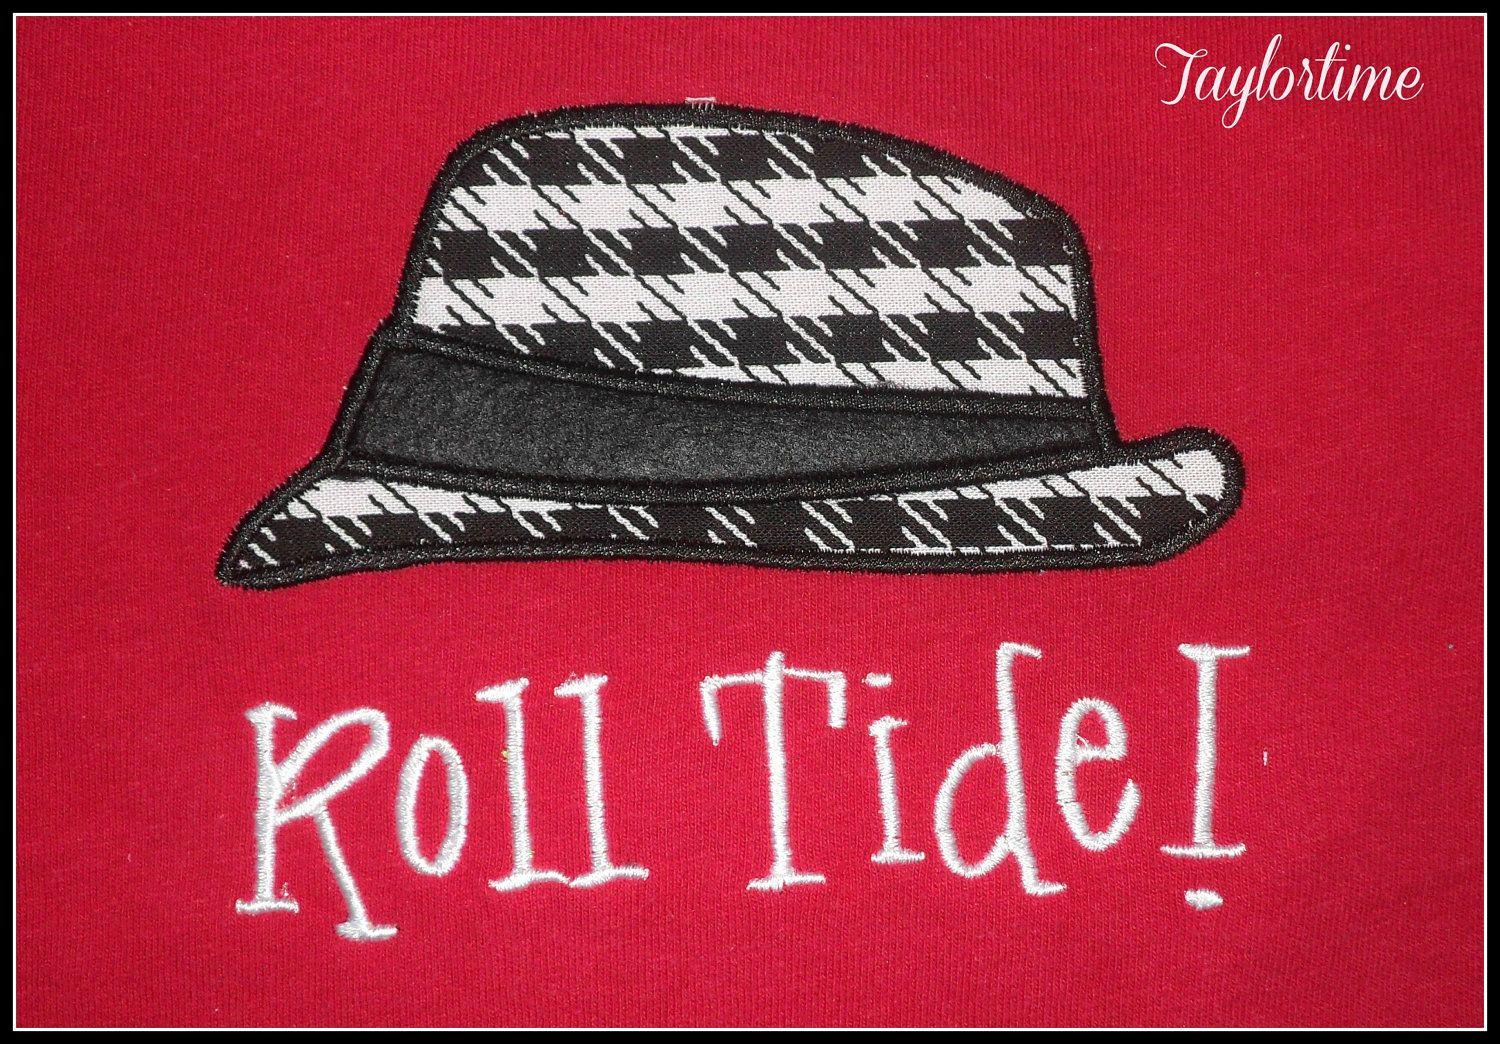 Alabama Crimson Tide Logo Wallpaper